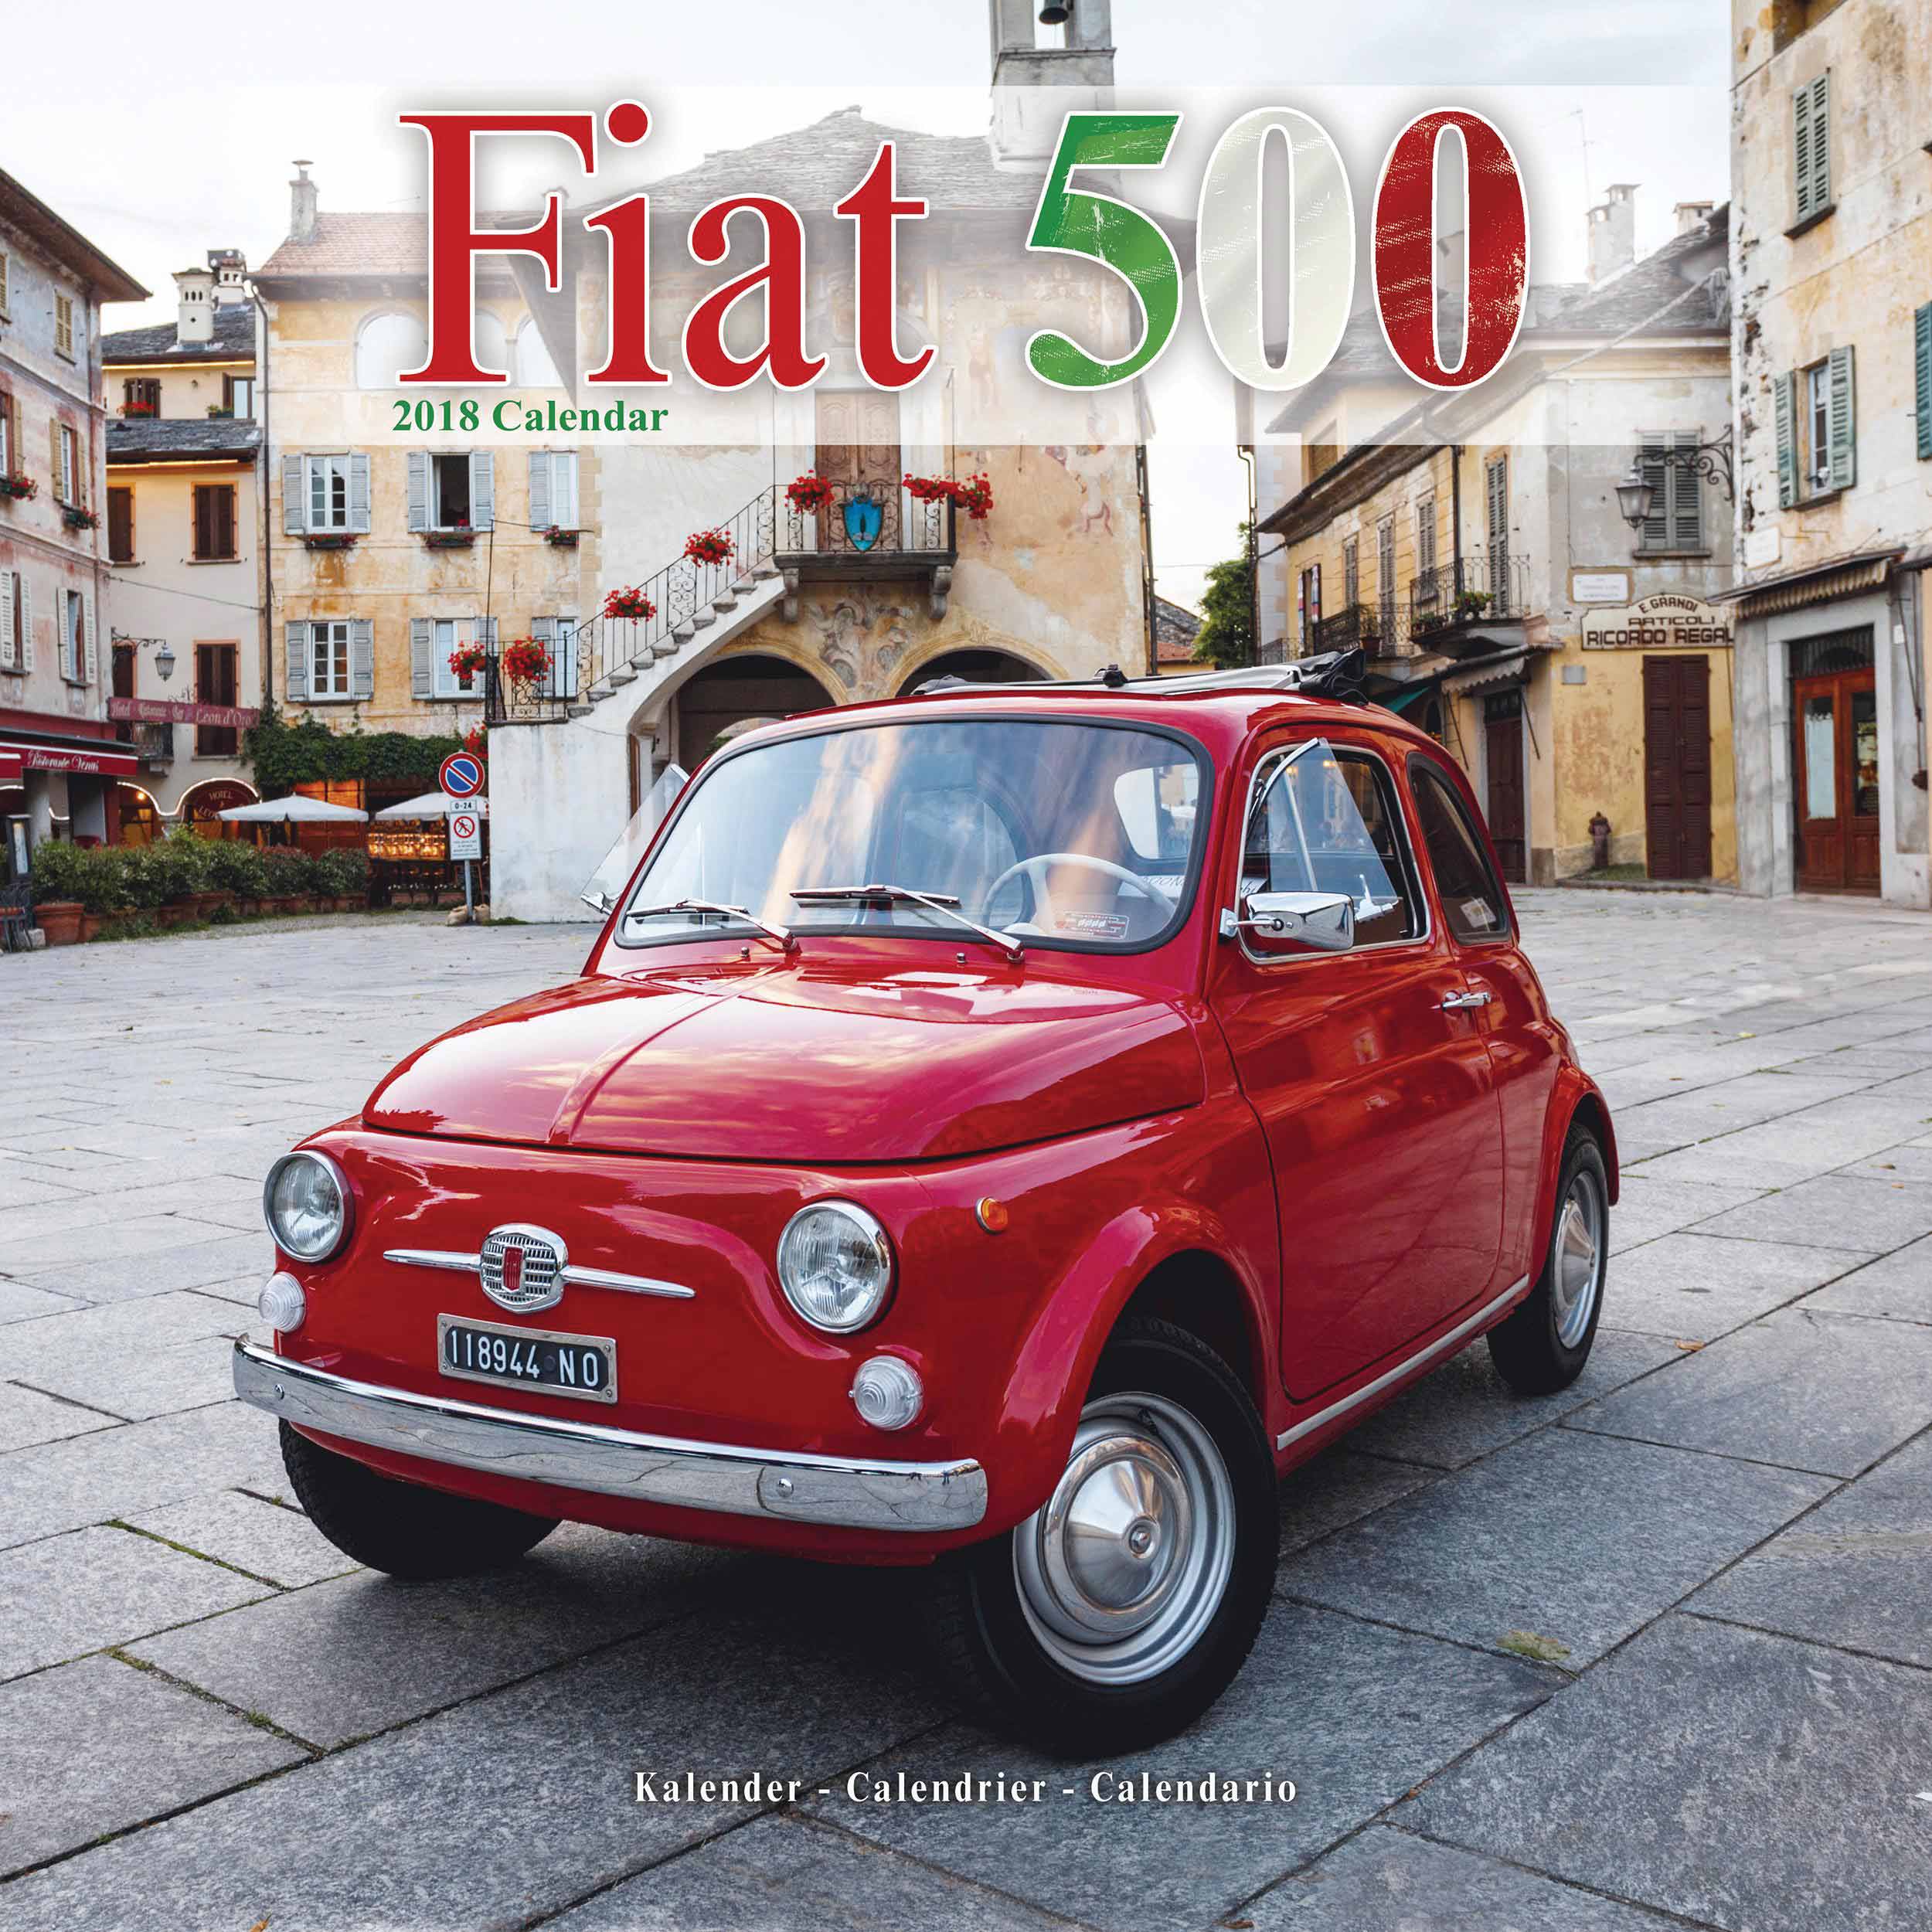 Fiat 500 Calendar 2018 - Calendar Club UK